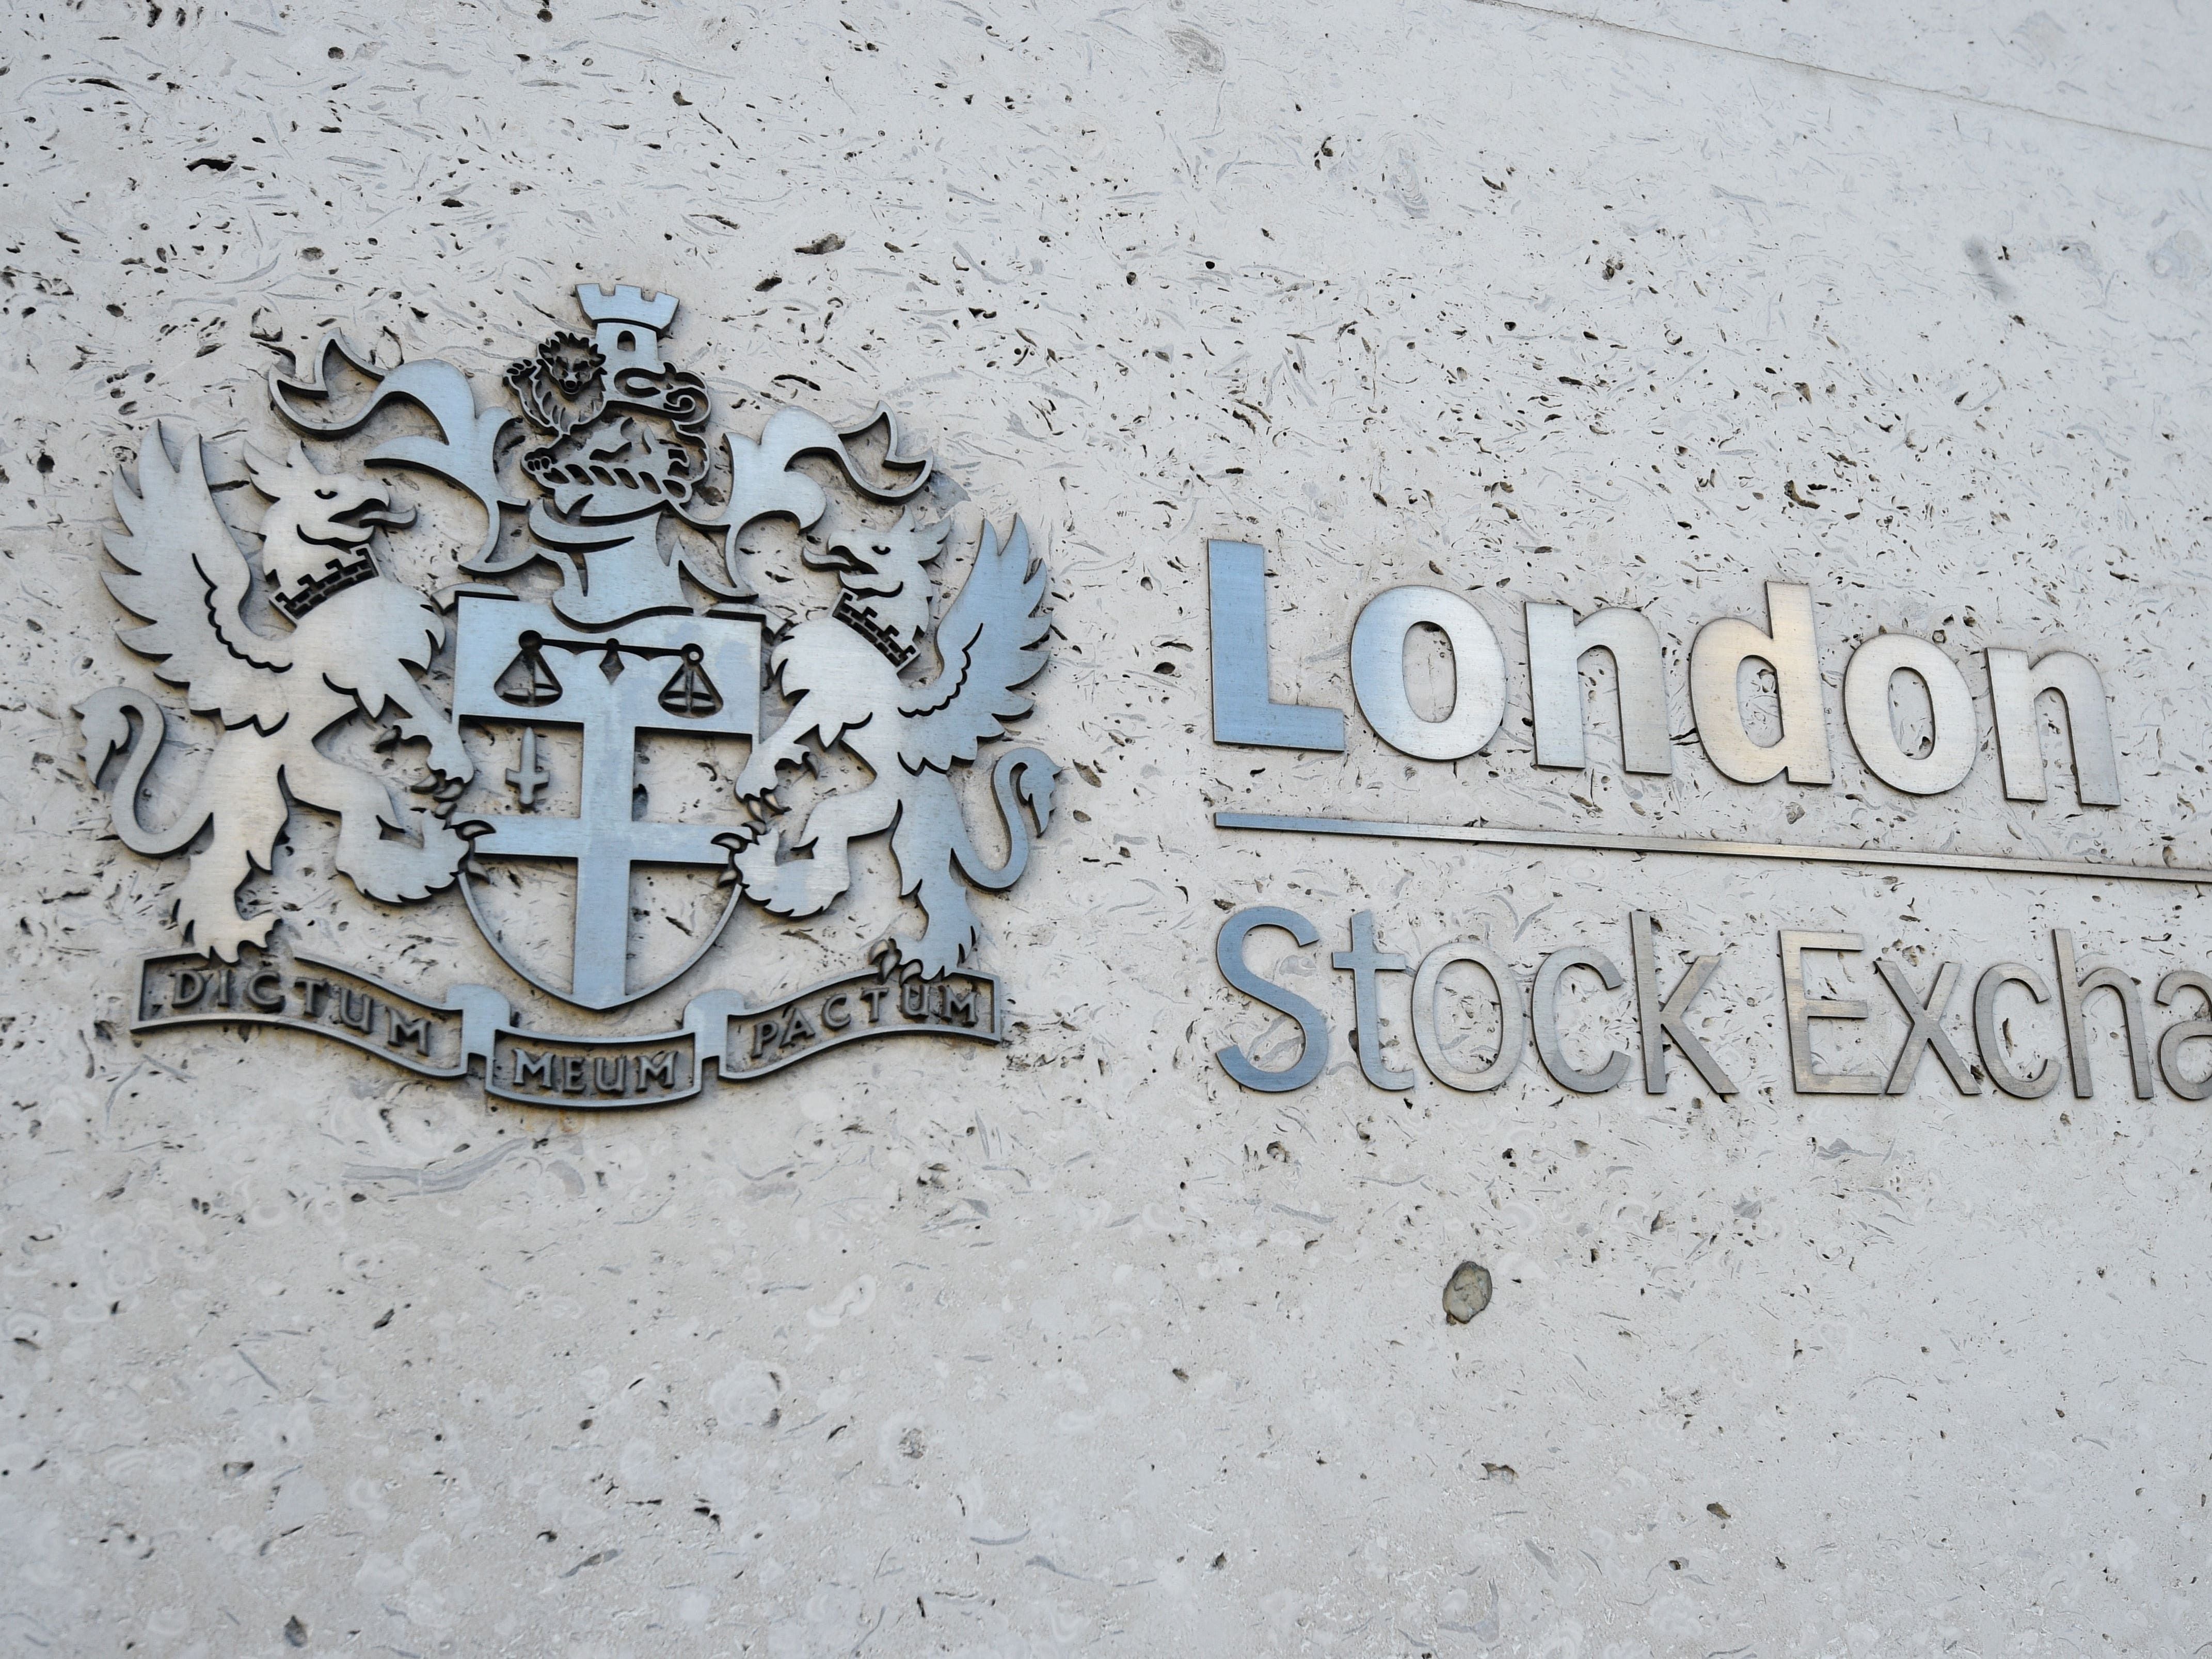 London Stock Exchange and Barclaysâ services hit as markets drop on IT outage